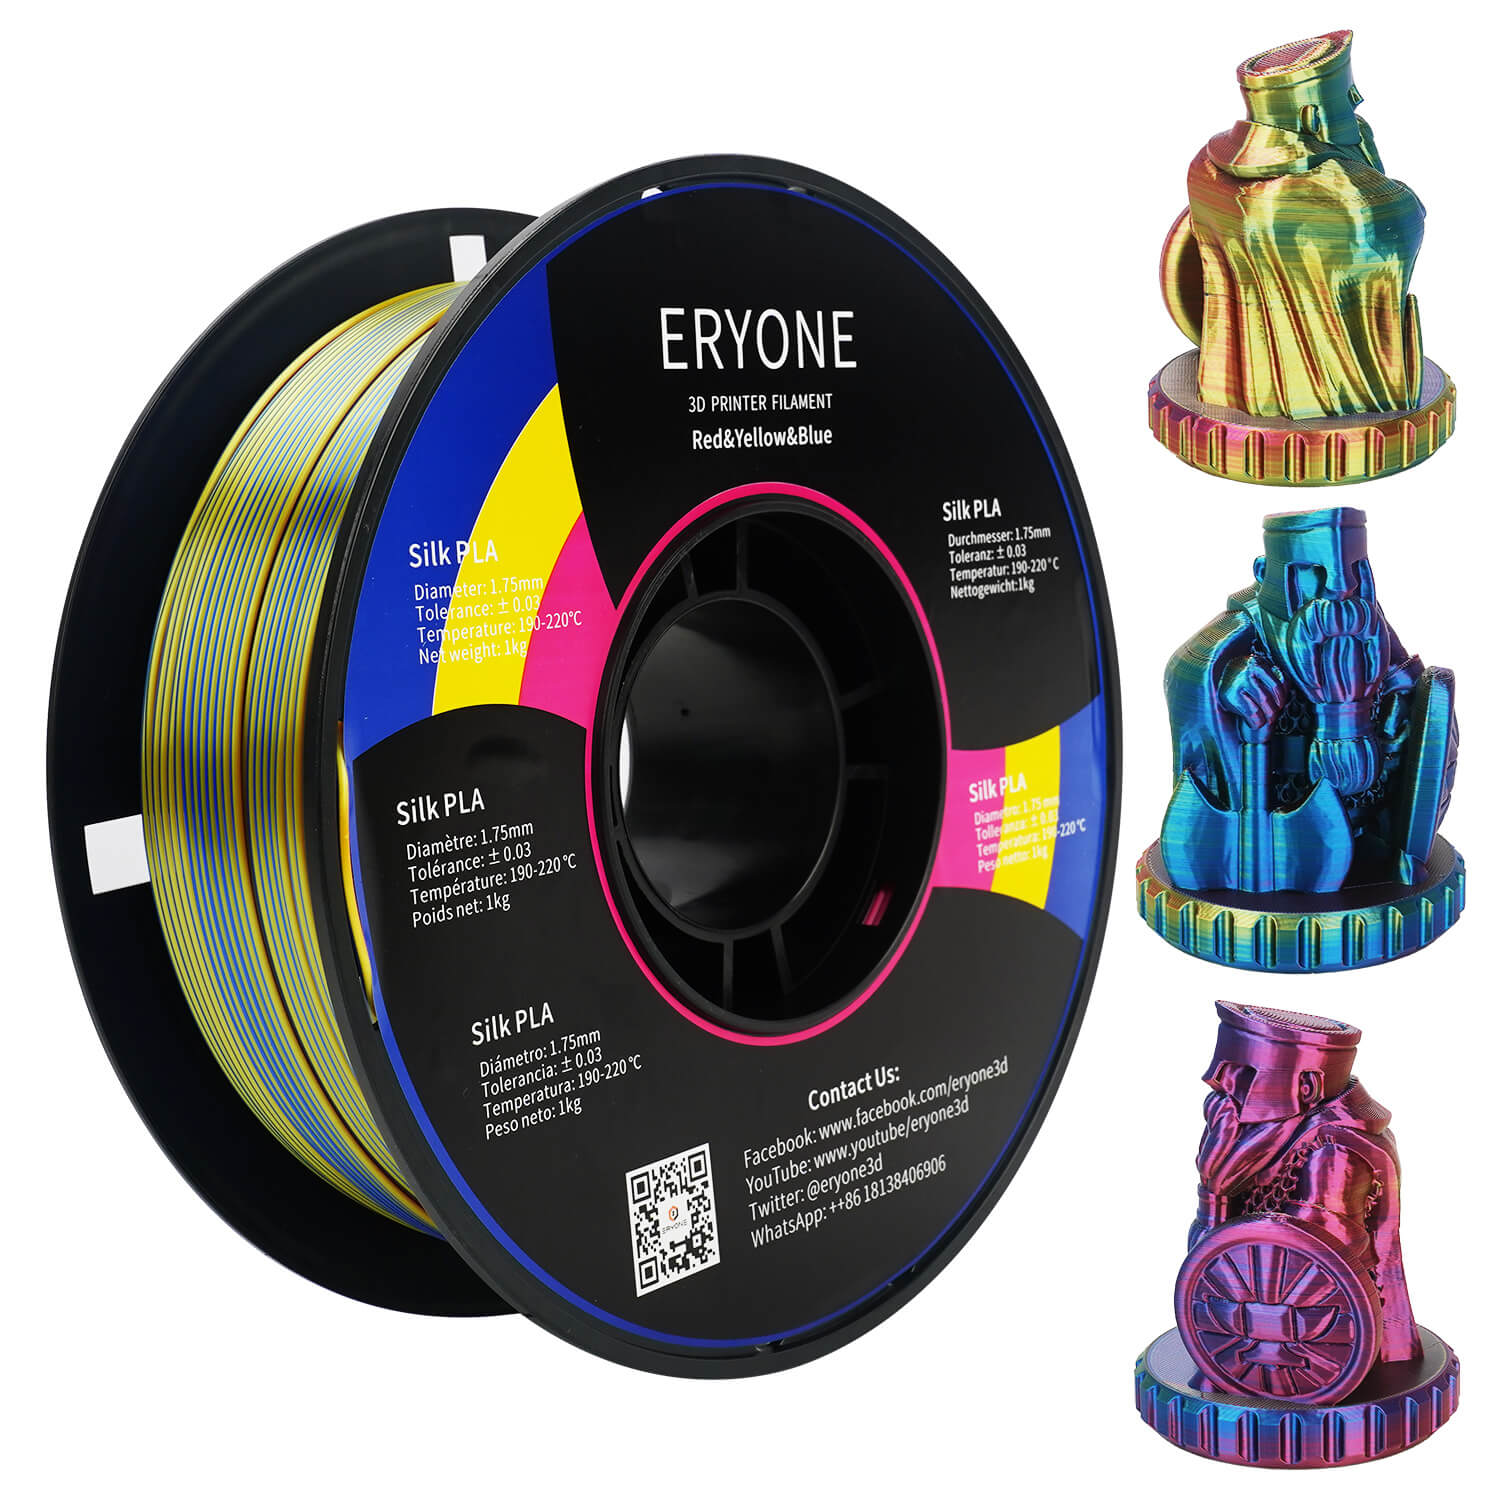 ERYONE Triple-Color Silk PLA Filament for 3D Printers,1kg (2.2LBS)/Spool 1.75mm,Accuracy +/- 0.03 mm